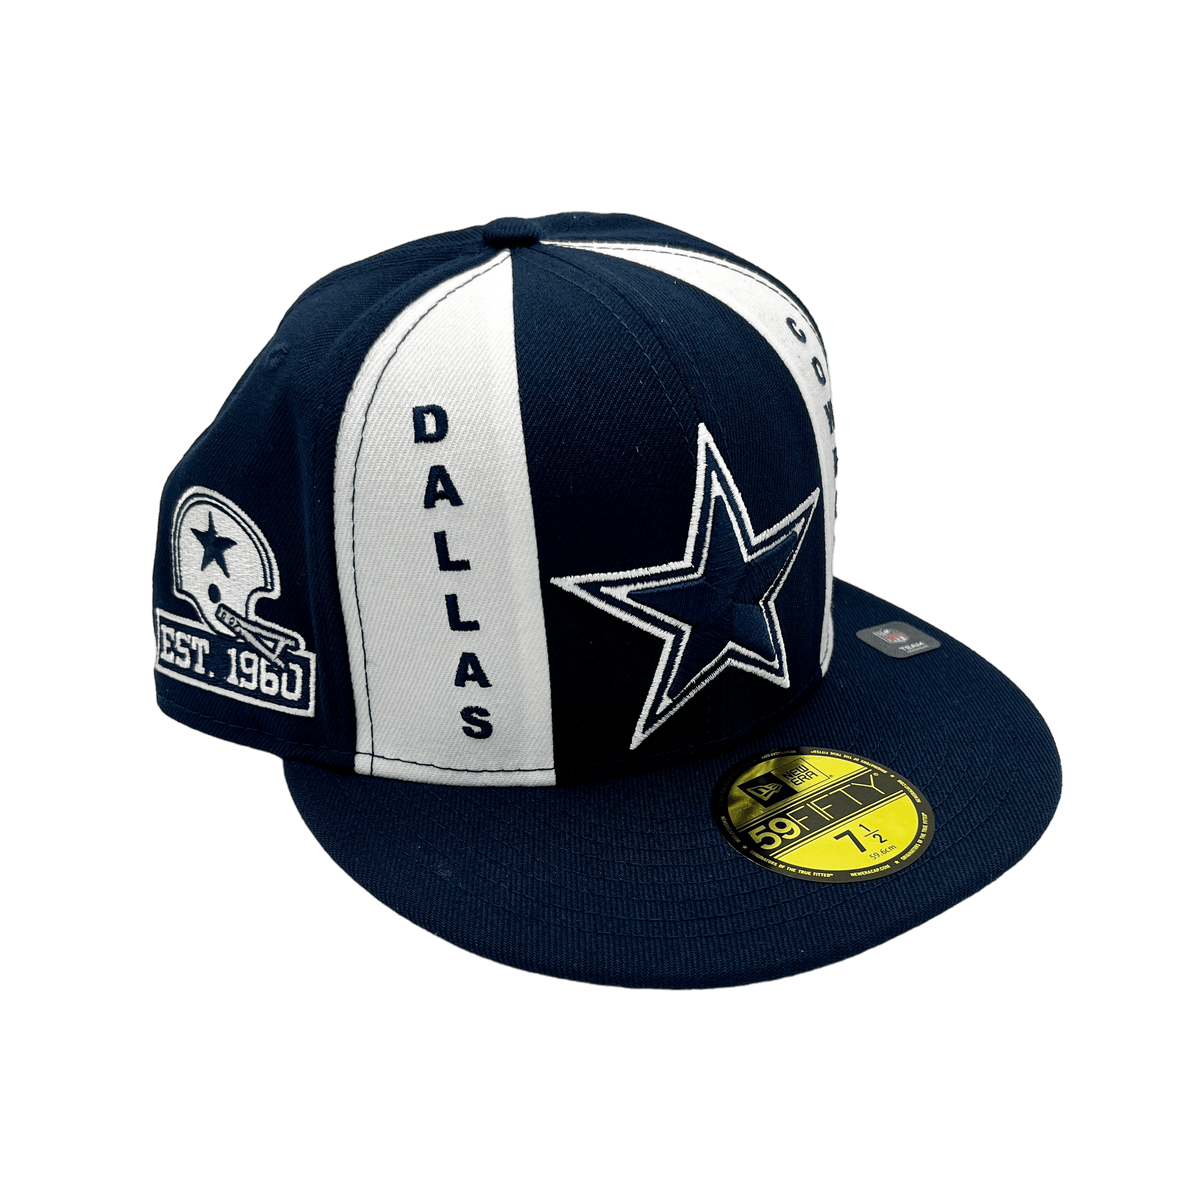 nfl cowboys hat